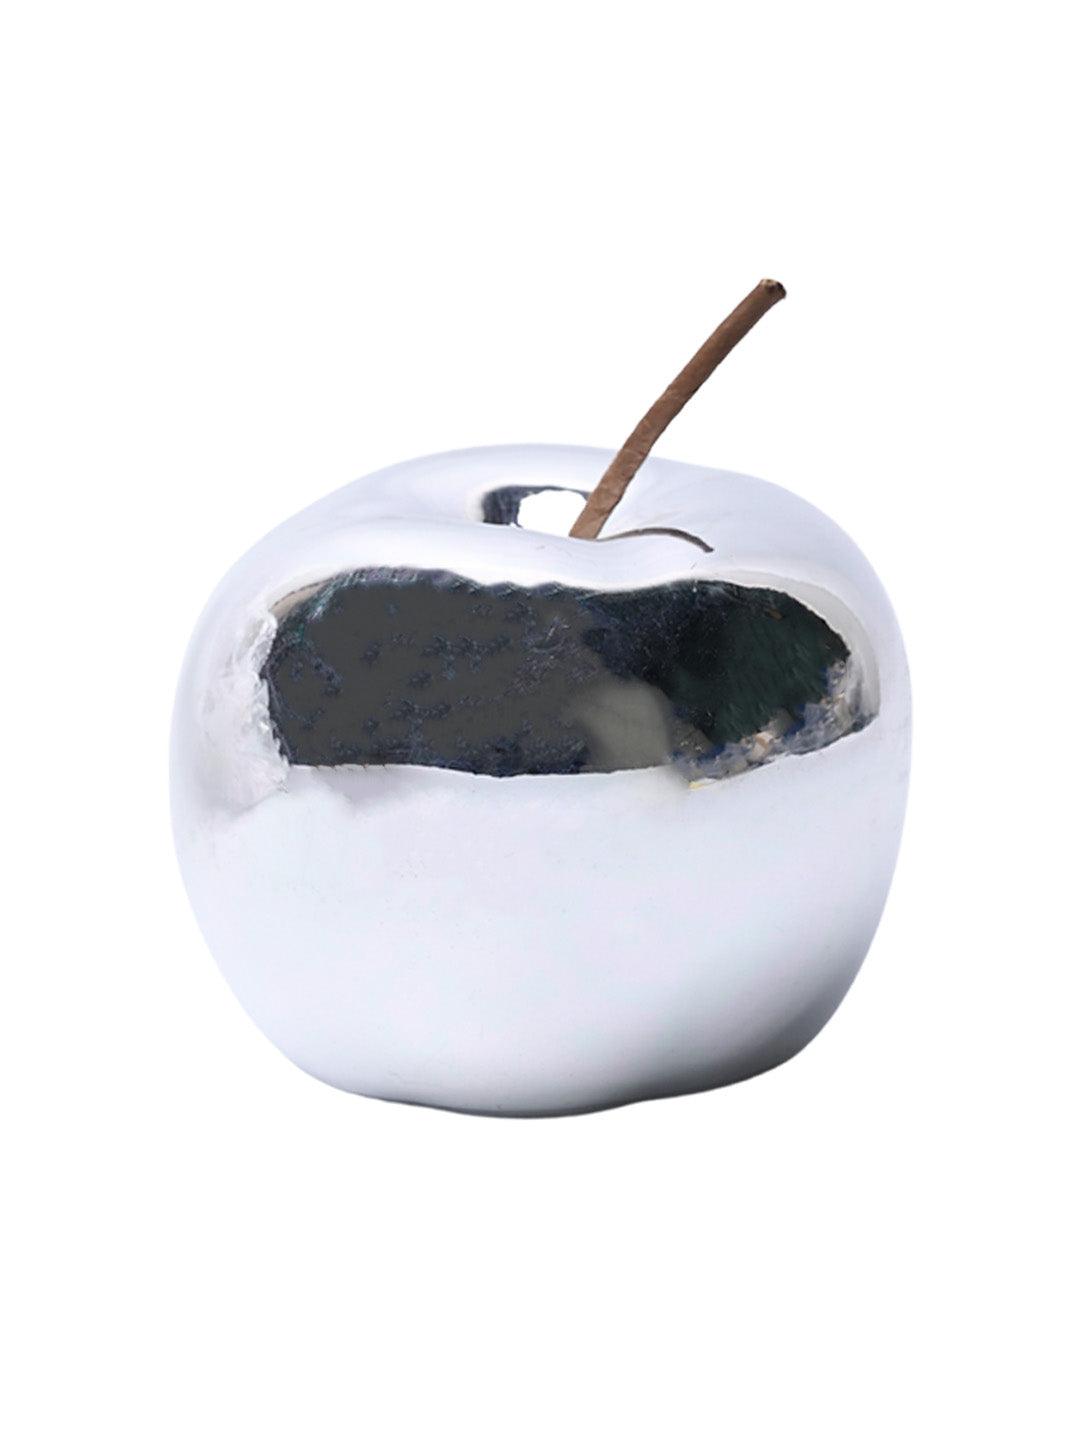 Decorative Ceramic Silver Apple With Leaf - MARKET99